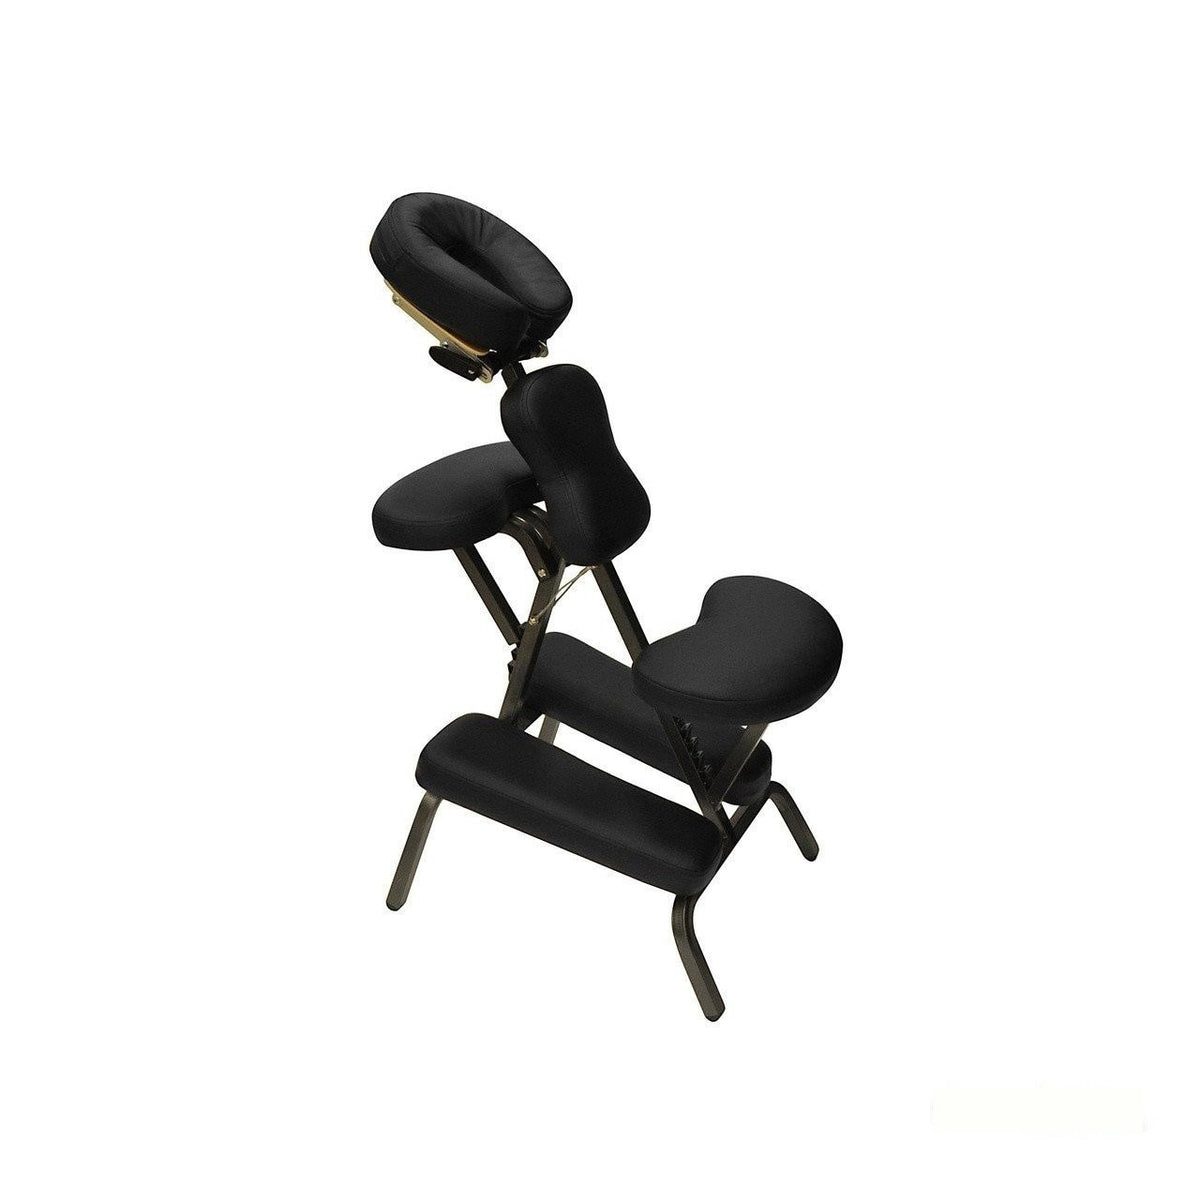 Dermalogic Dermalogic Madera Portable Massage Chair Portable Massage Chair - ChairsThatGive